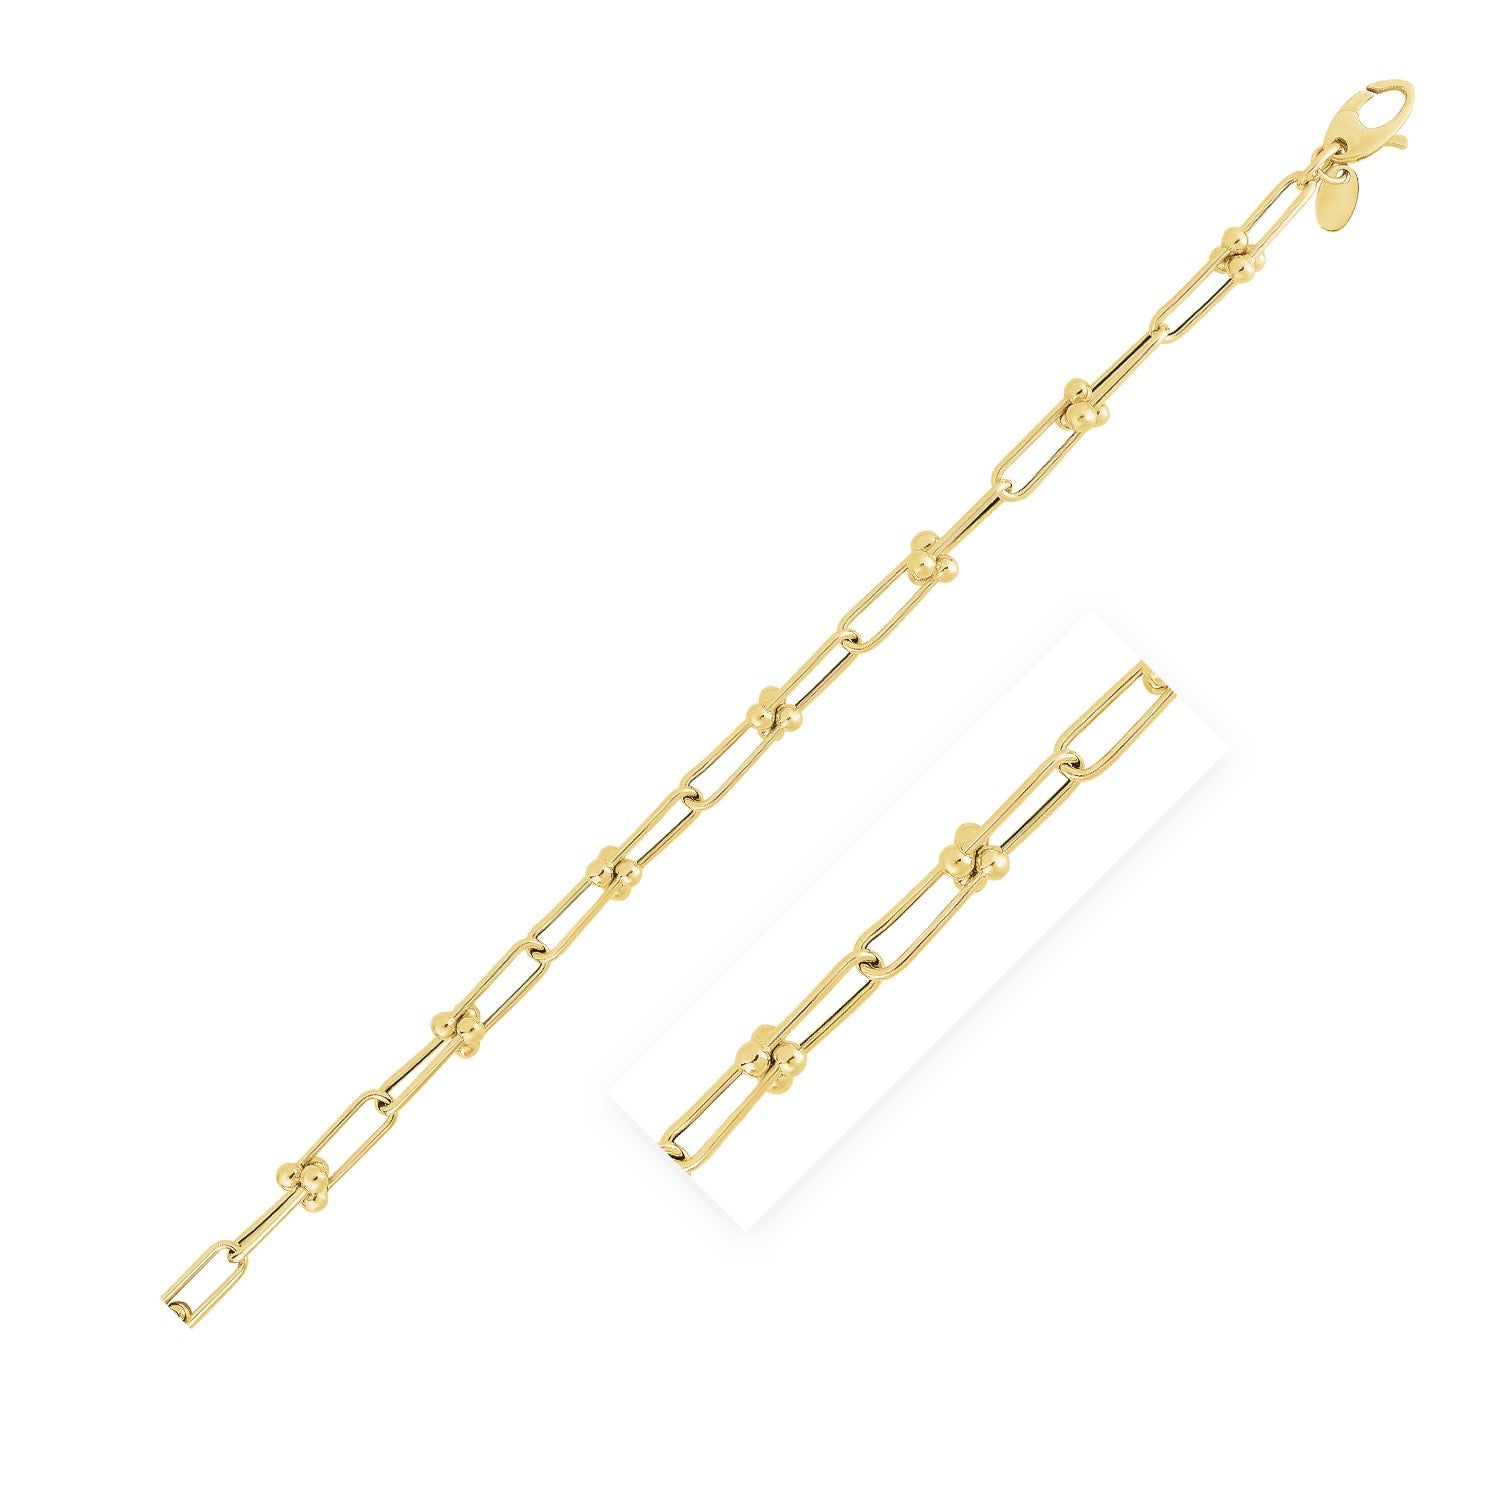 14k Yellow Gold High Polish Jax Link Chain Bracelet (5.9mm)